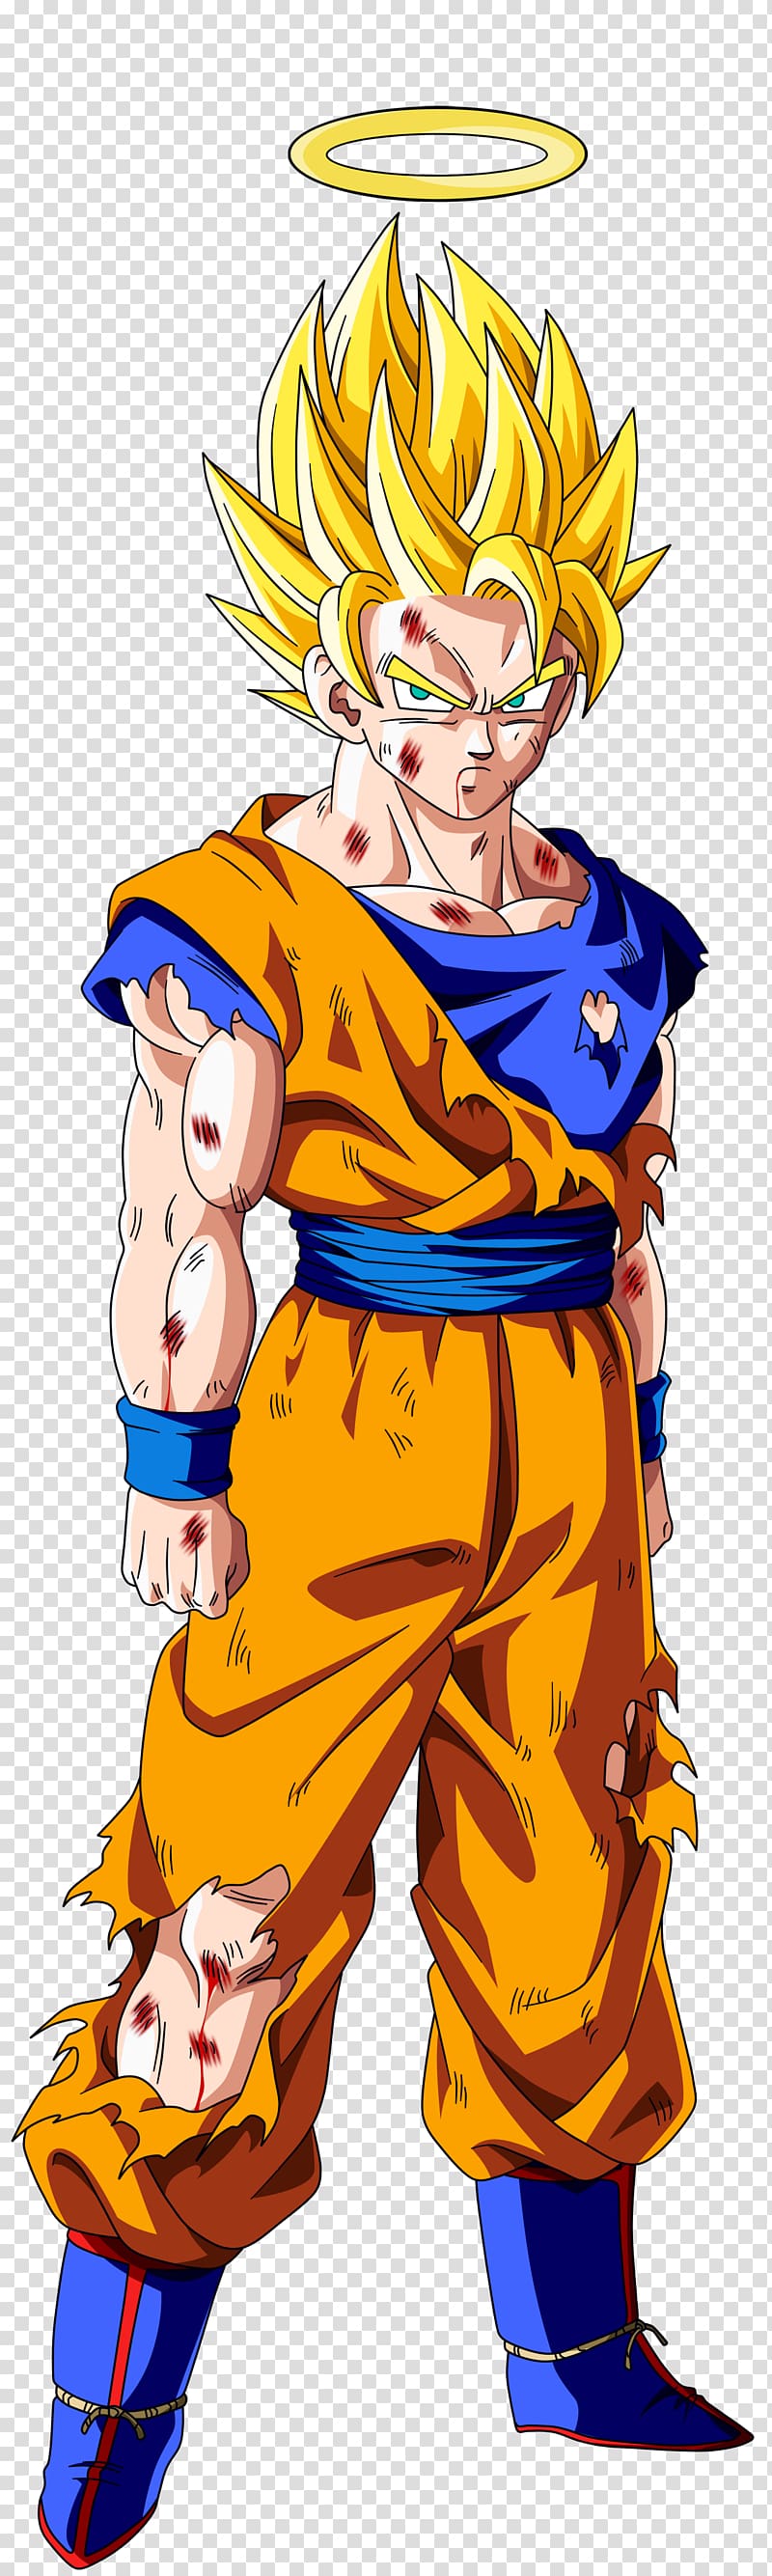 Son Goku illustration, Goku Vegeta Gohan Cell Trunks, dragon ball z transparent background PNG clipart